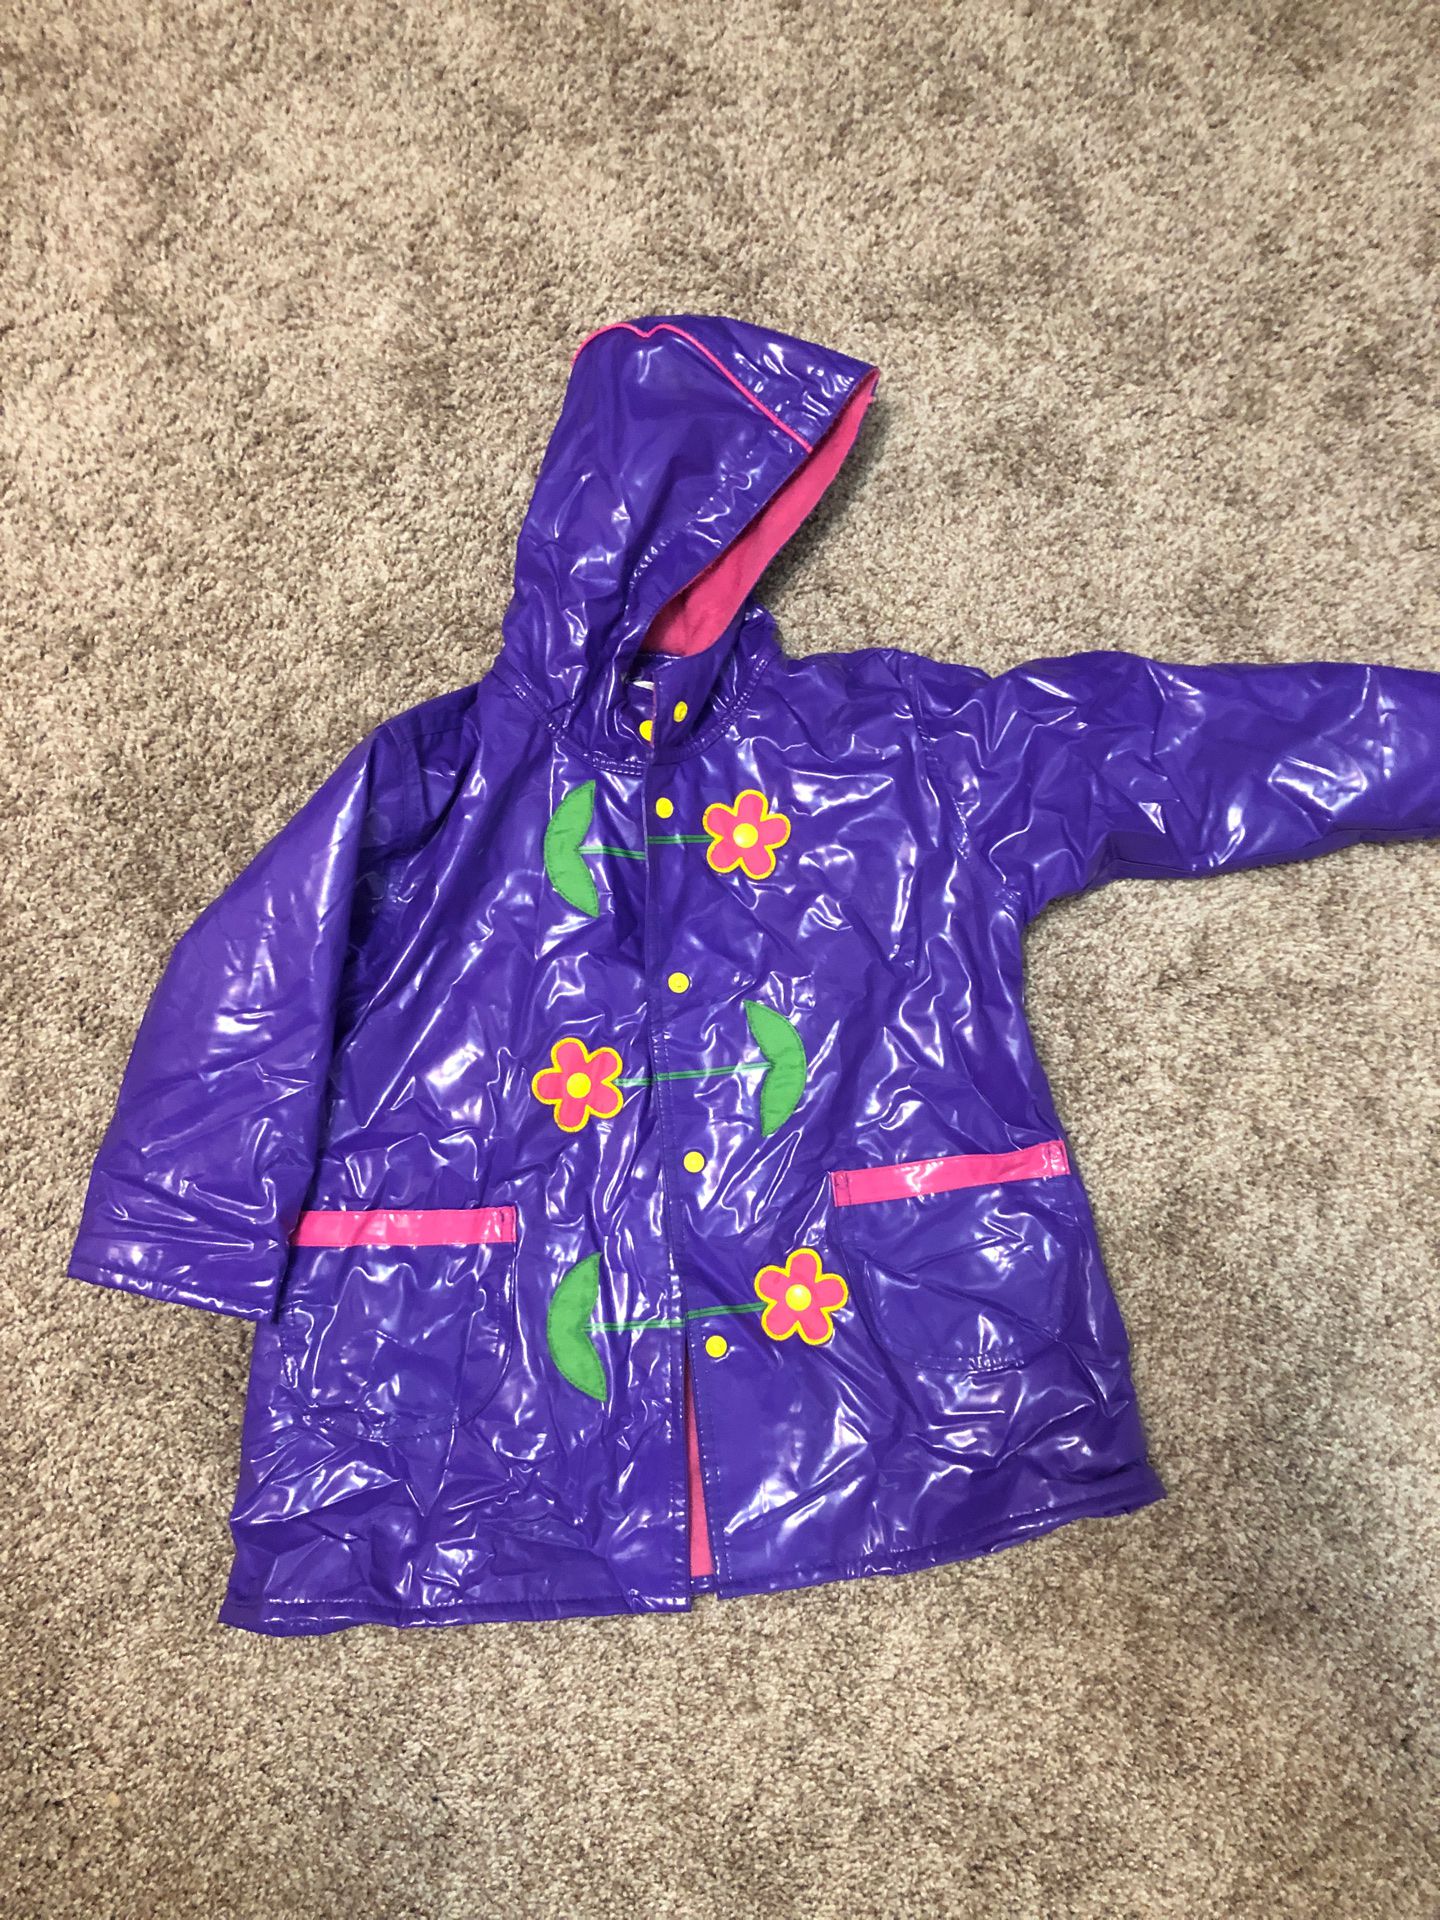 Toddler raincoat size 4 clothes